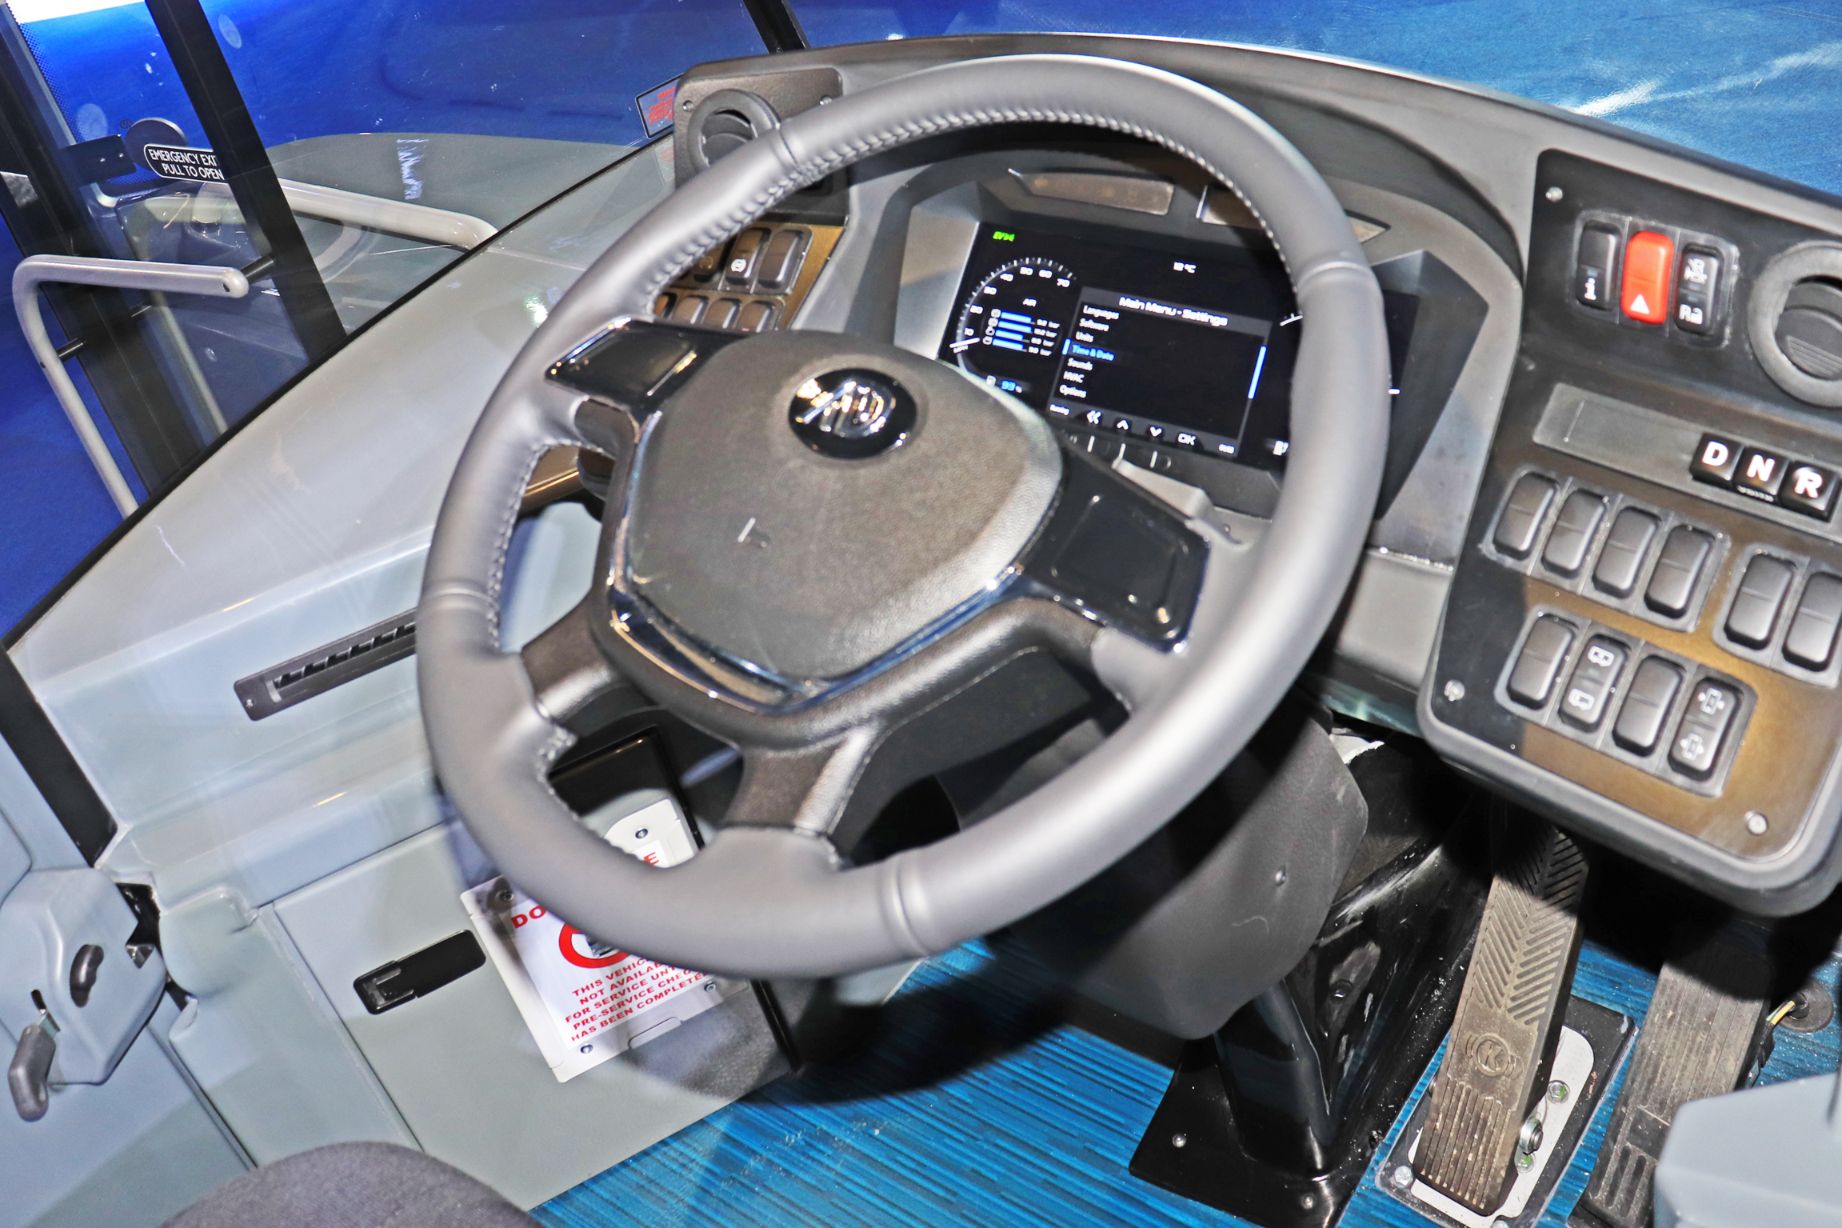 The enviro400EV's steering wheel